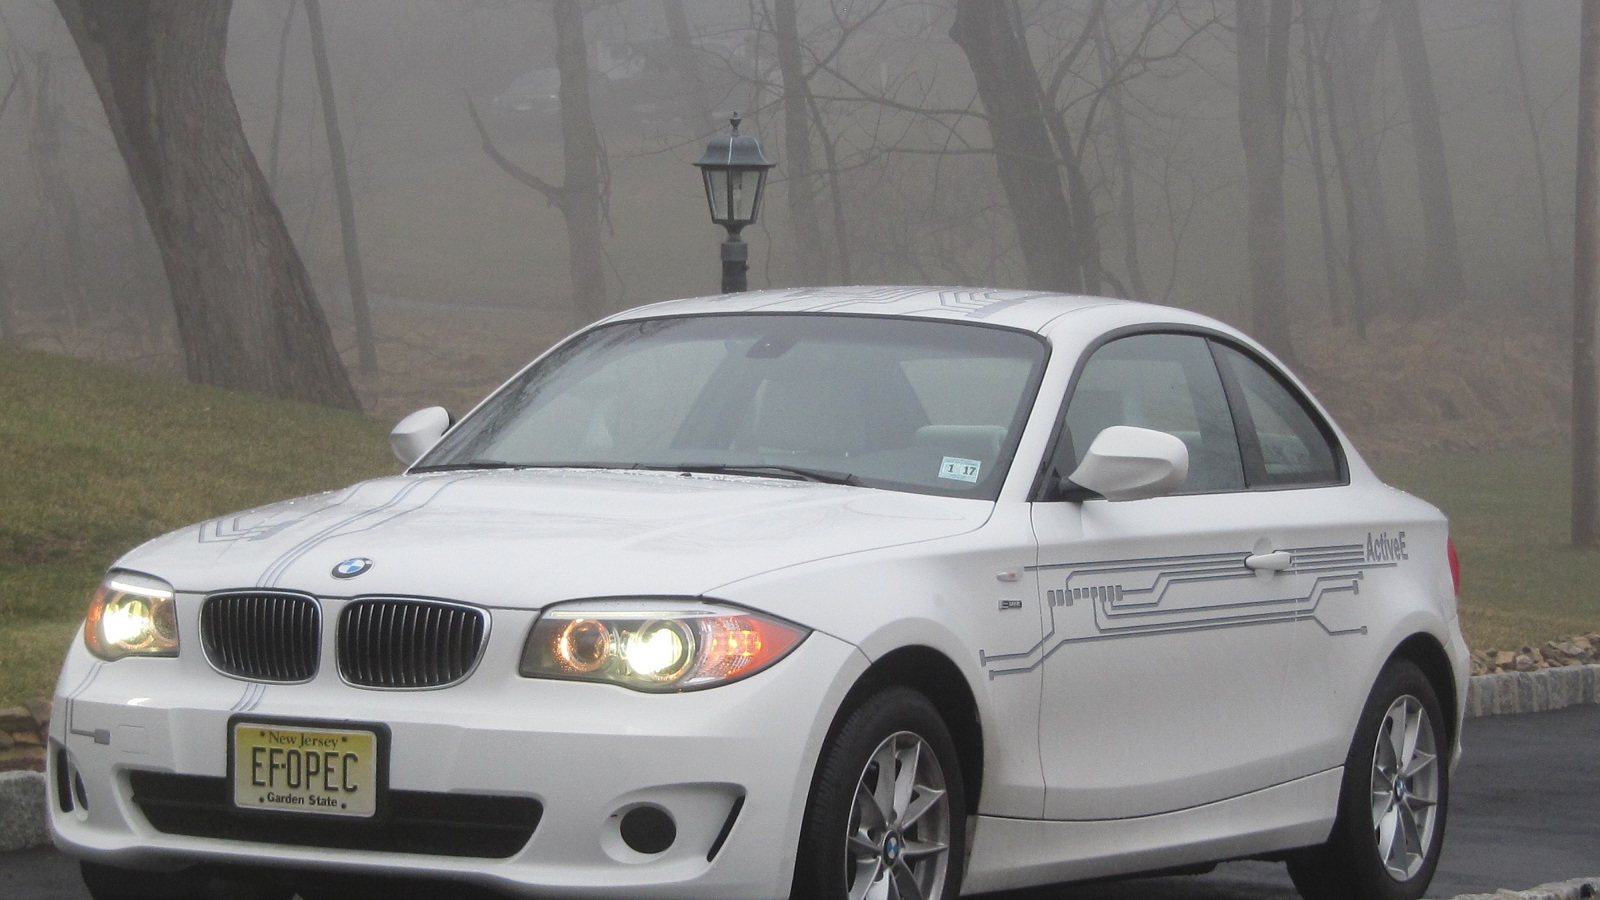 BMW ActiveE electric car, January 2012, New Jersey